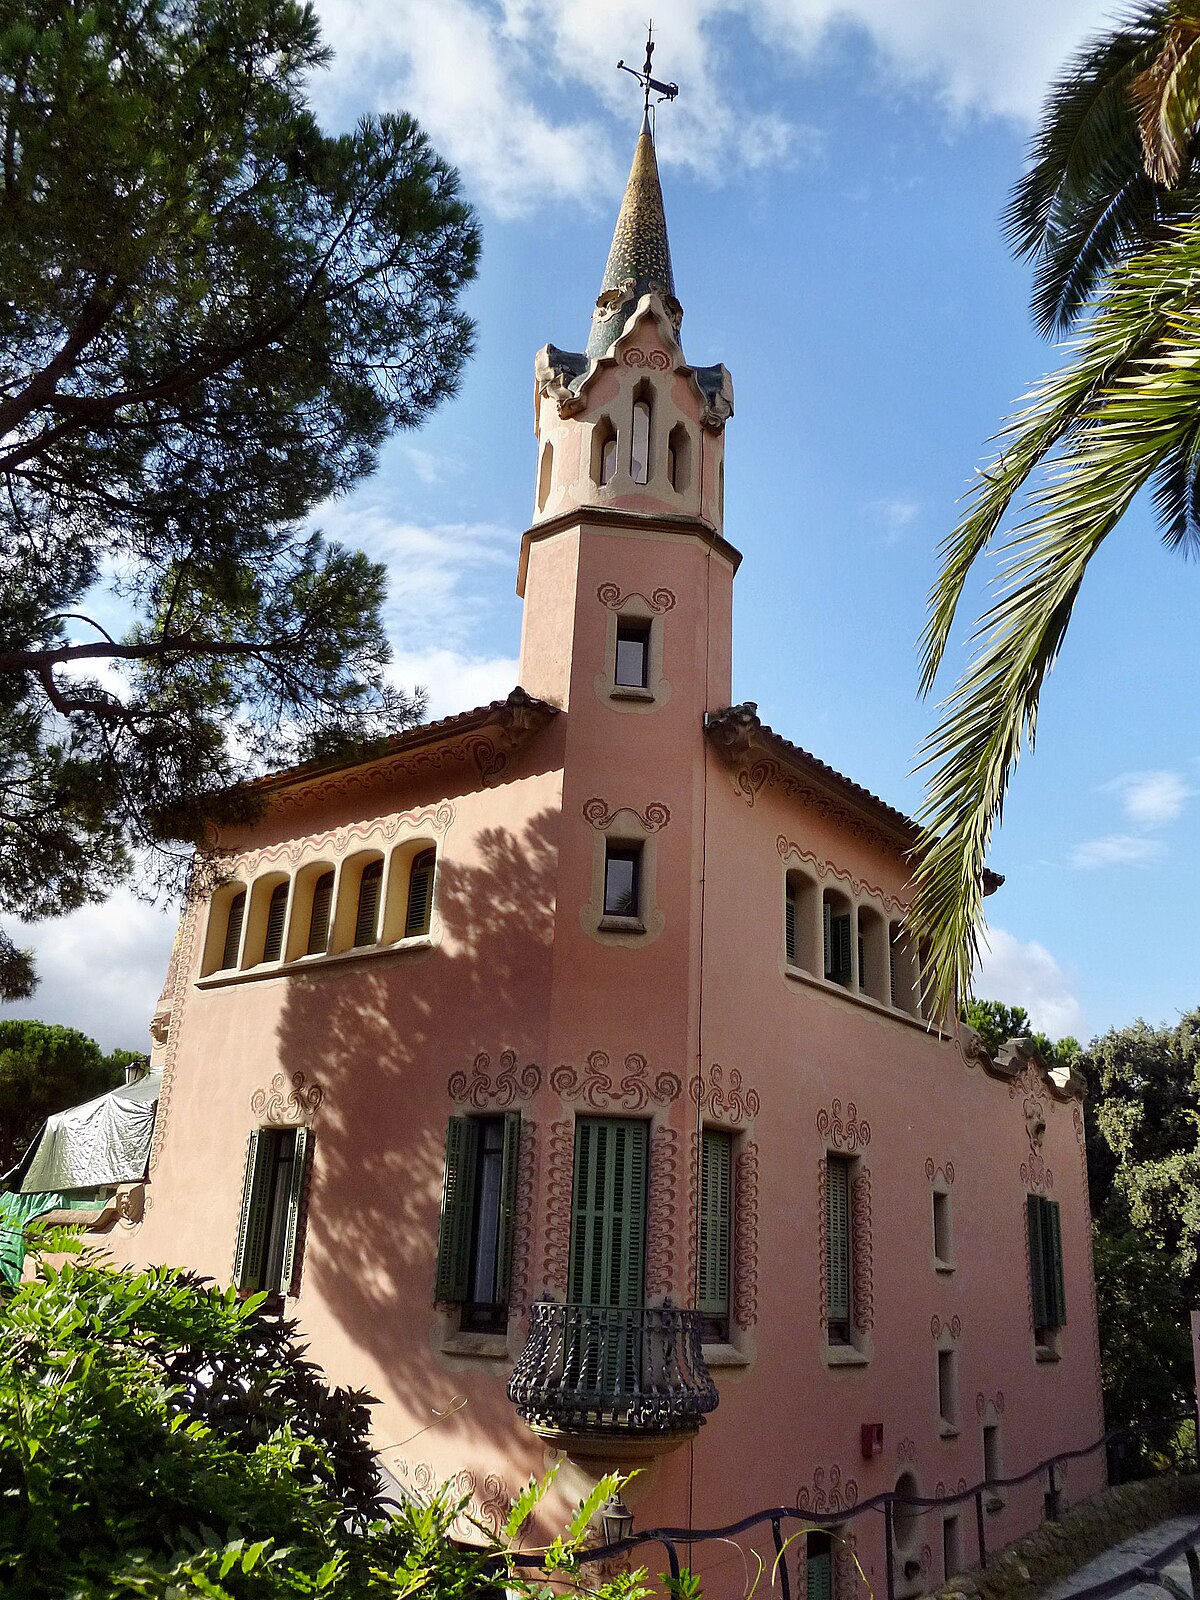 Casa Museu Gaudi Wikipedia